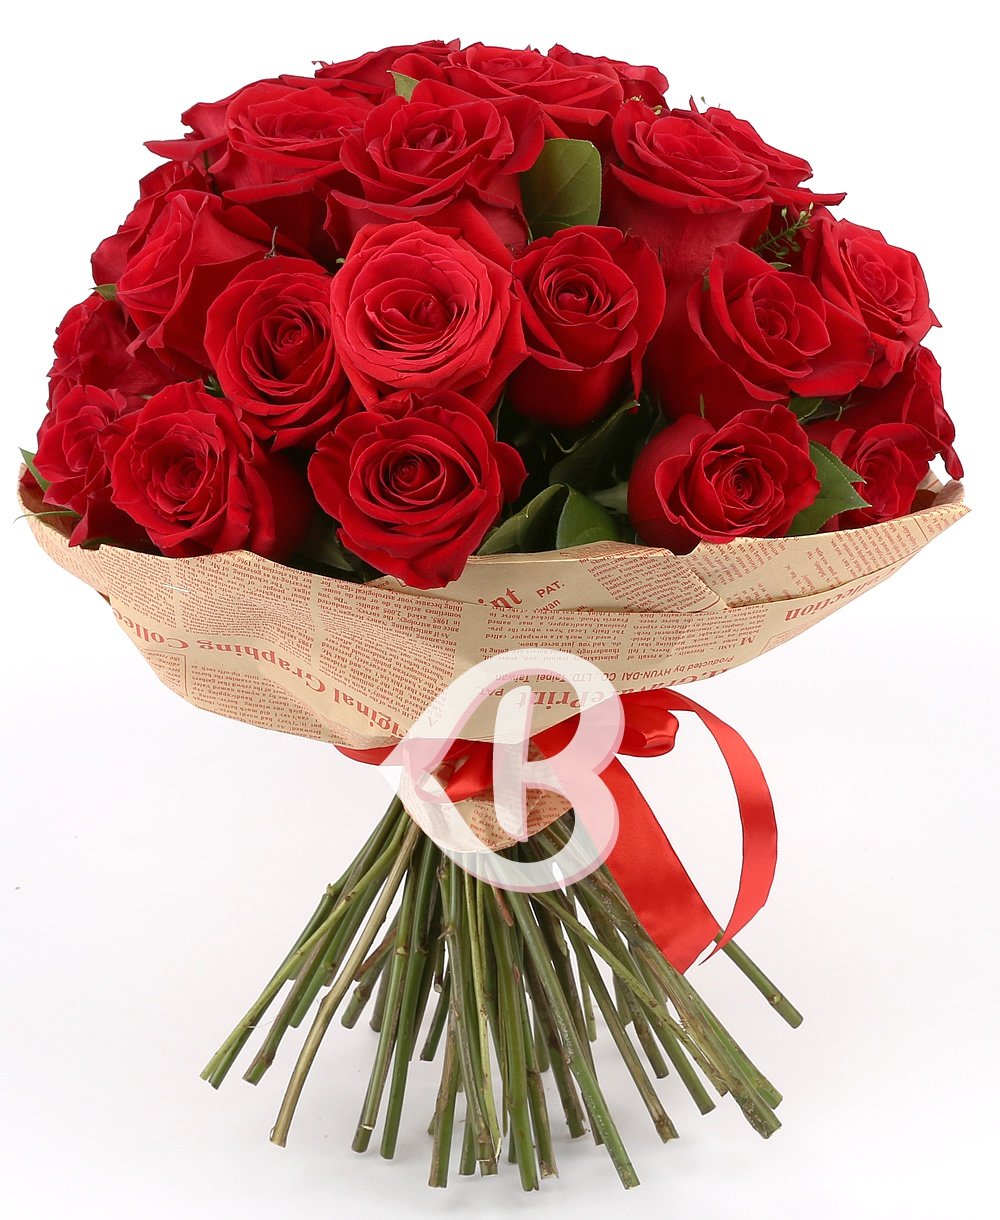 Imaginea produsului 35 Trandafiri Roșii